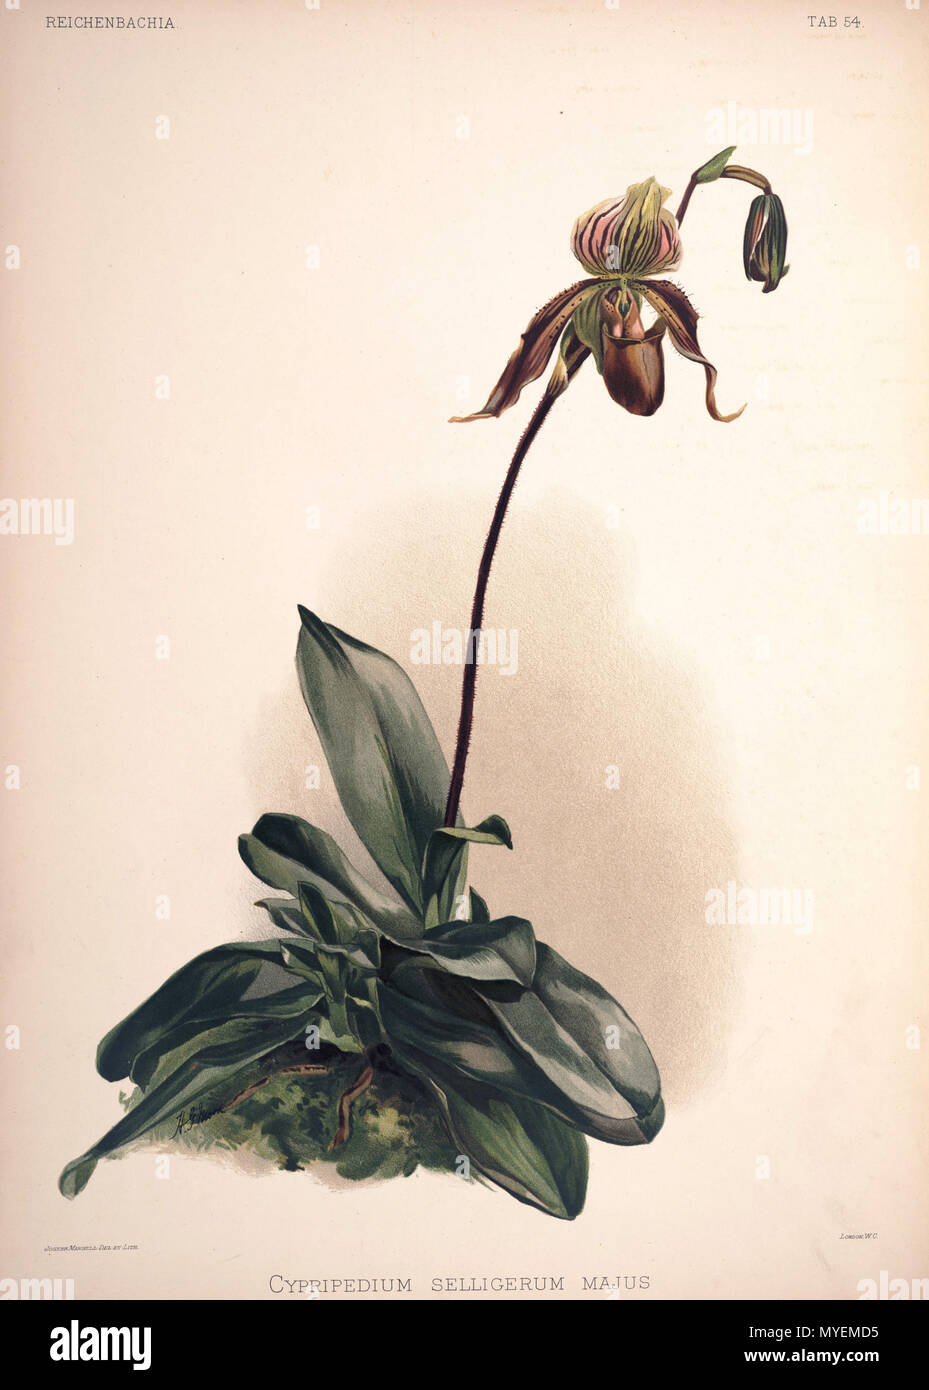 . Cypripedium × selligerum, cultivar: Paphiopedilum barbatum × Paphiopedilum philippinense . between 1888 and 1894. H. Sotheran & Co., London (editor) 189 Frederick Sander - Reichenbachia II plate 54 (1890) - Cypripedium selligerum majus Stock Photo